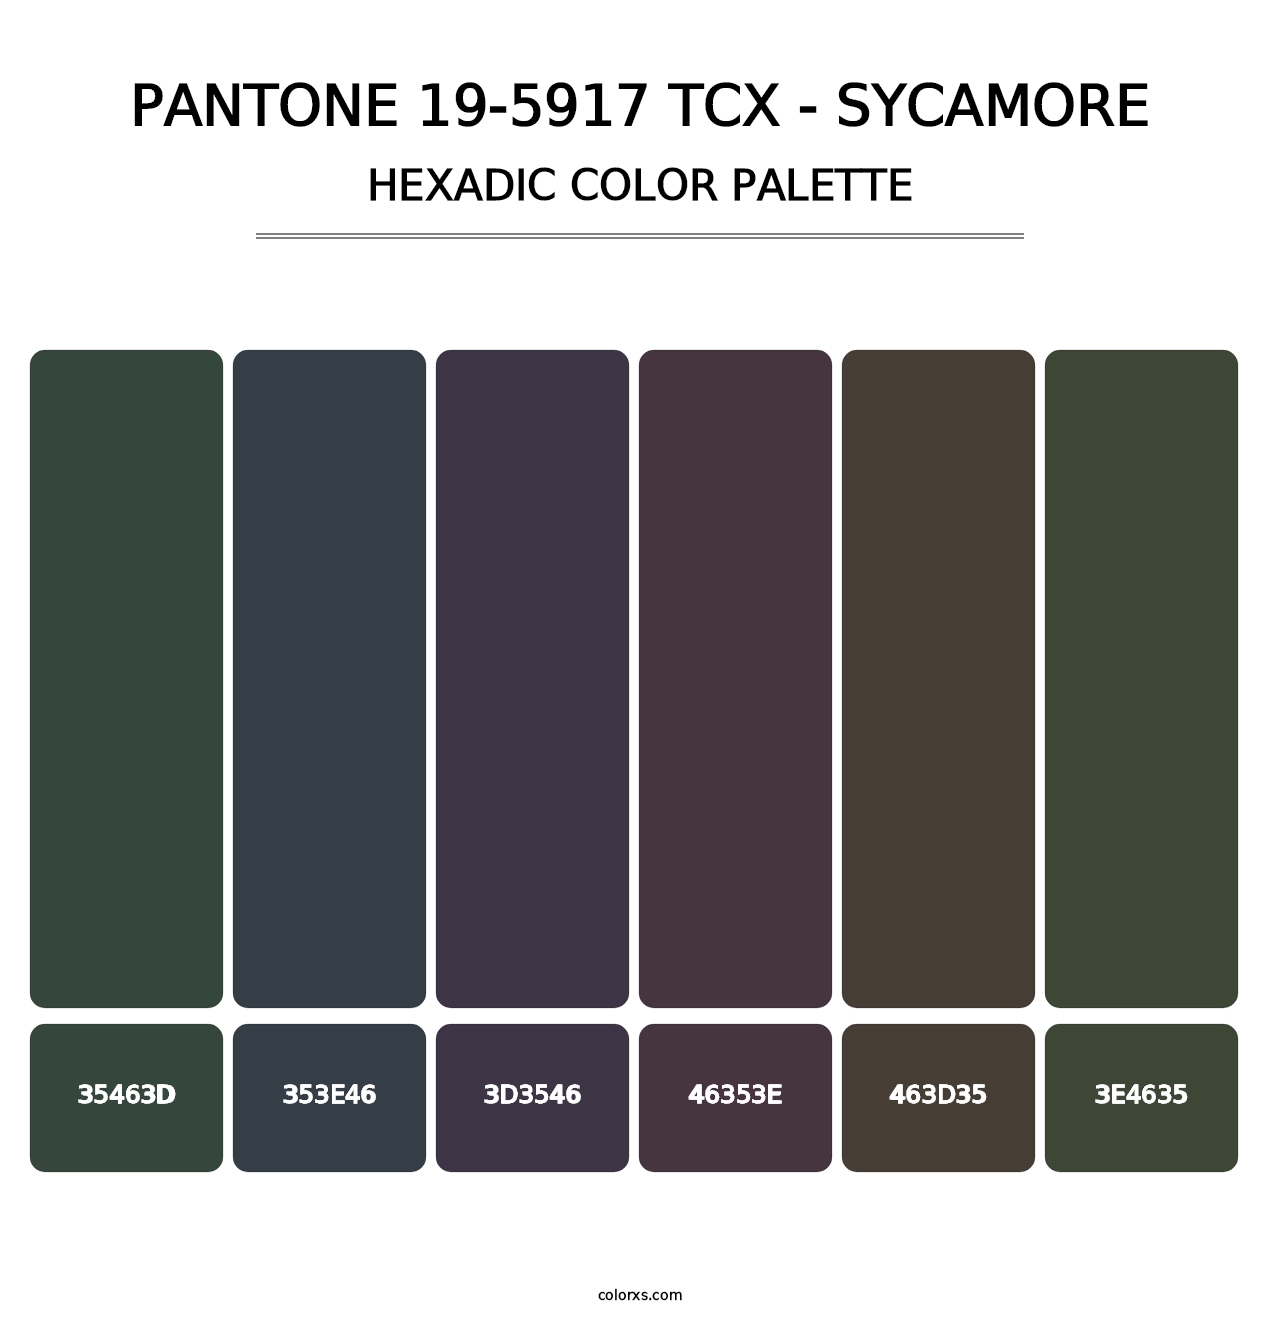 PANTONE 19-5917 TCX - Sycamore - Hexadic Color Palette